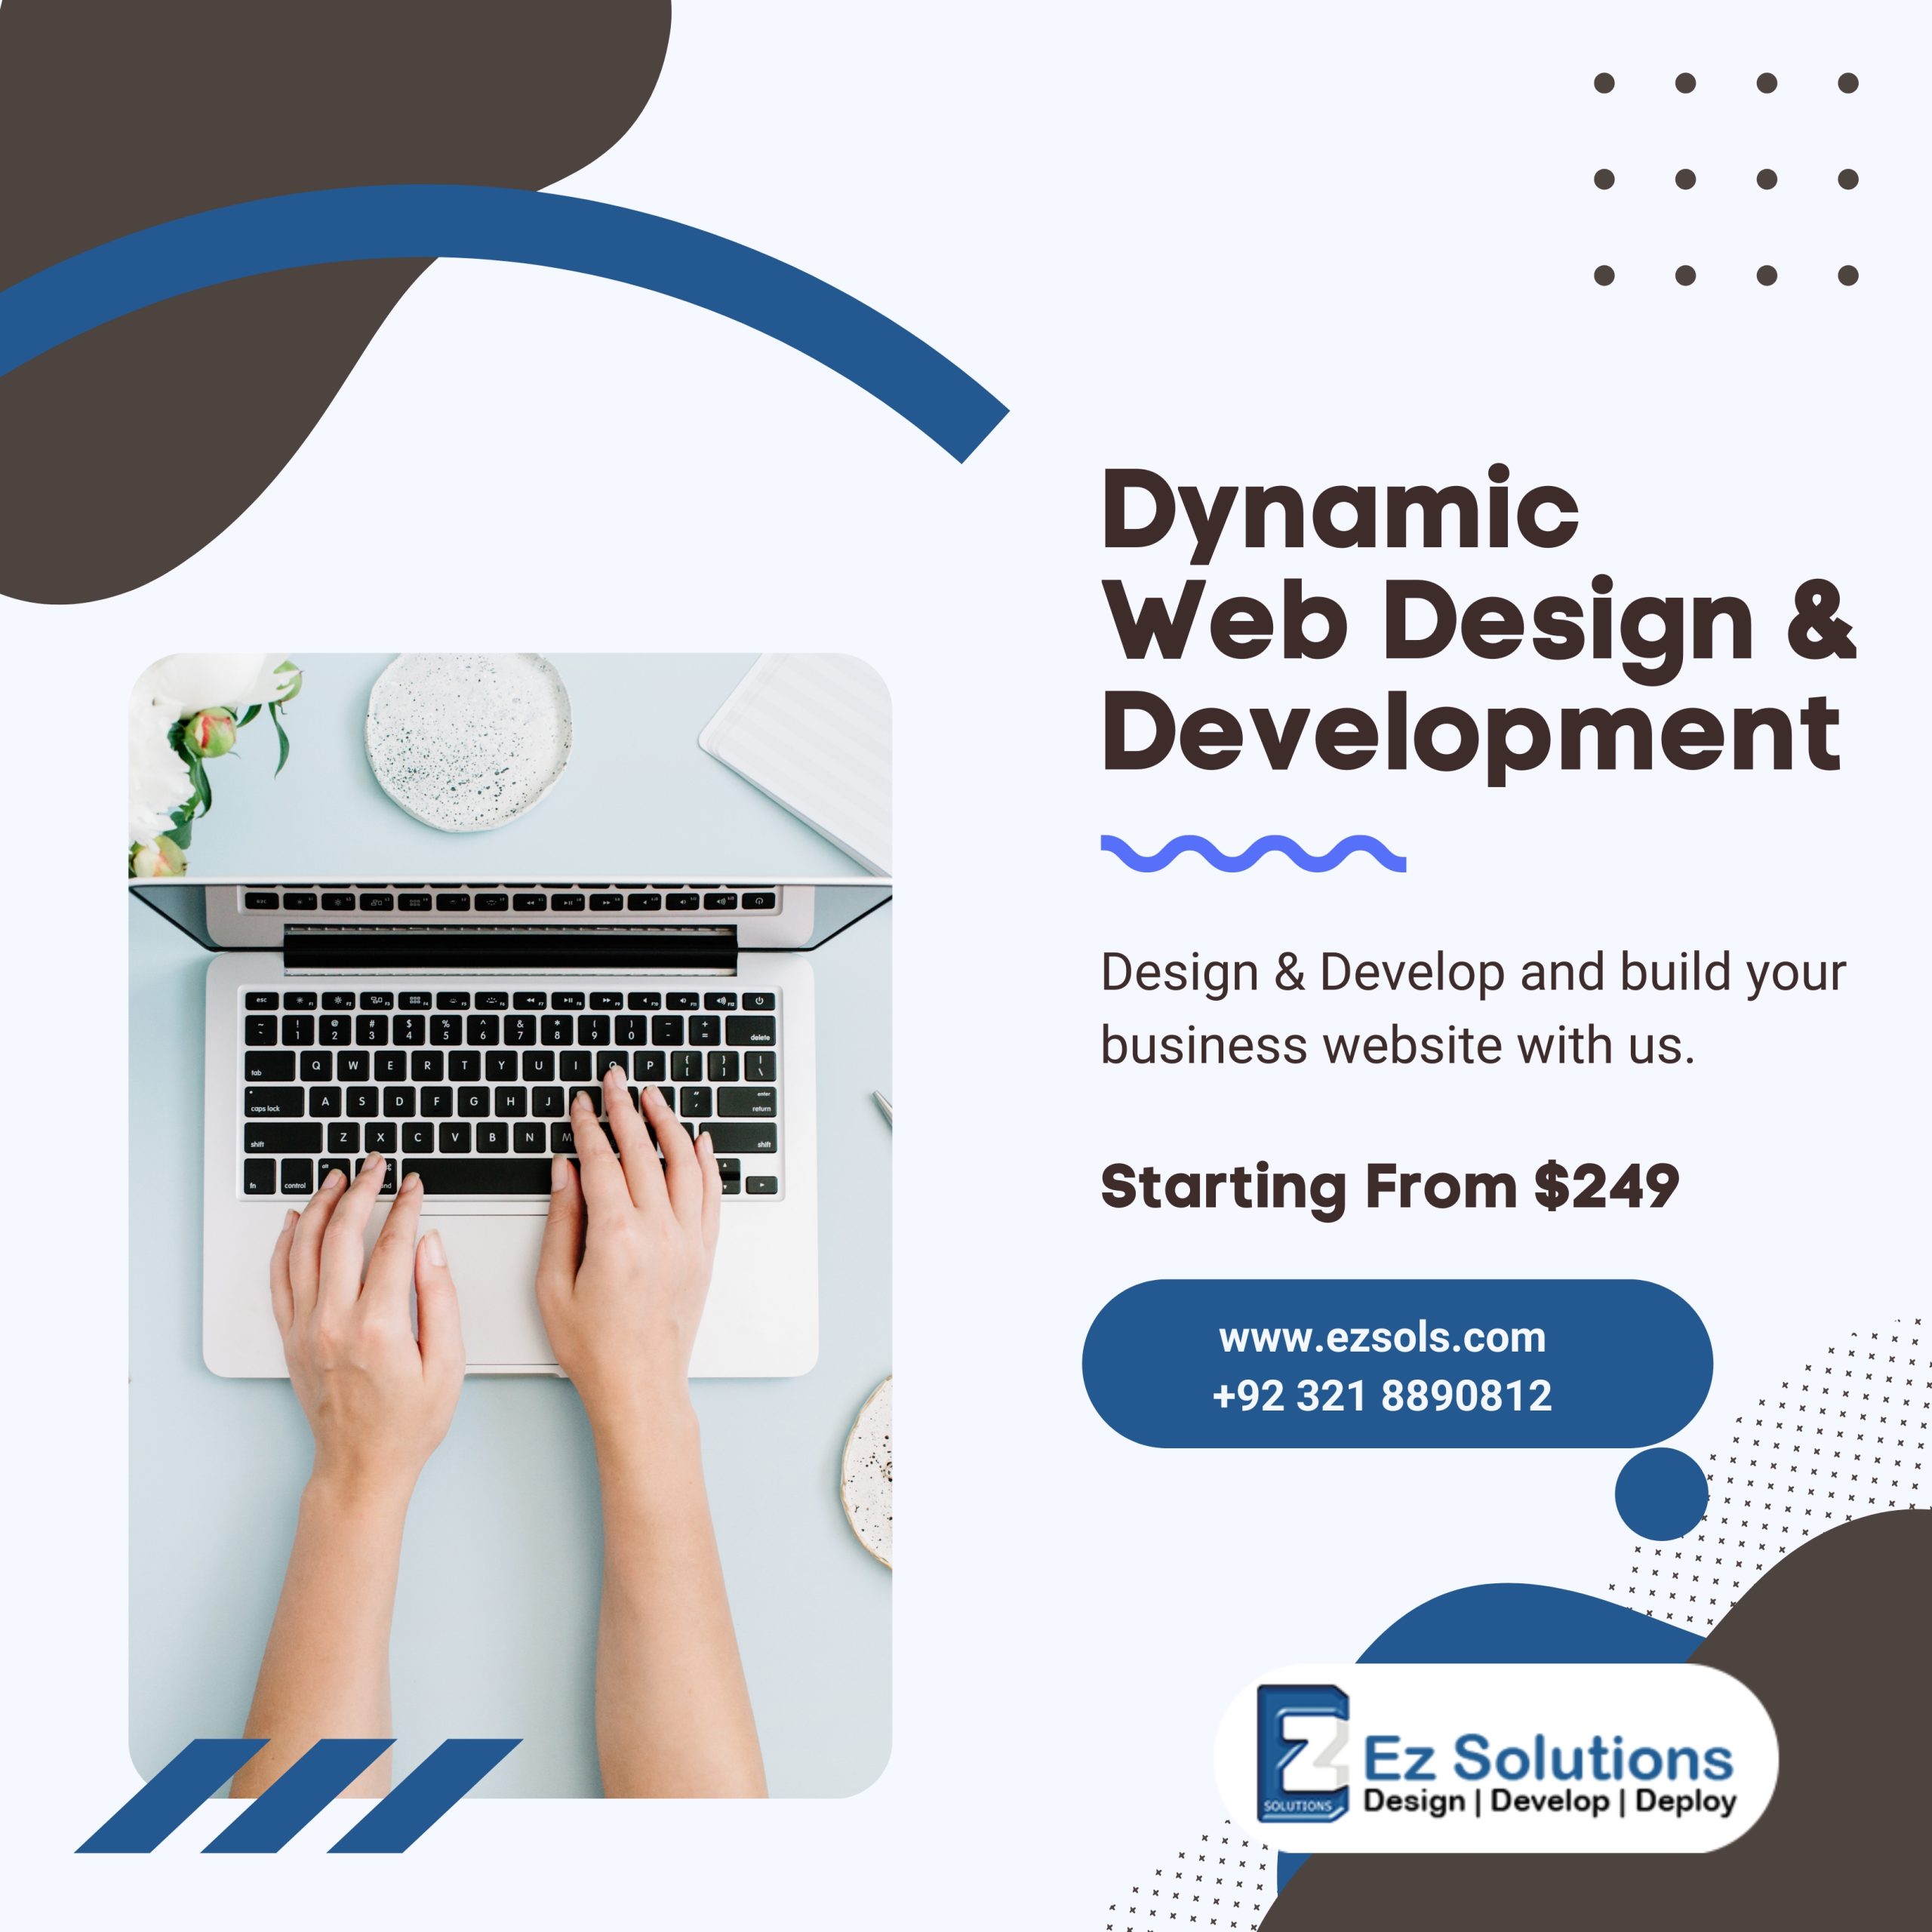 Dynamic Web Design & Development by Ez Solutions